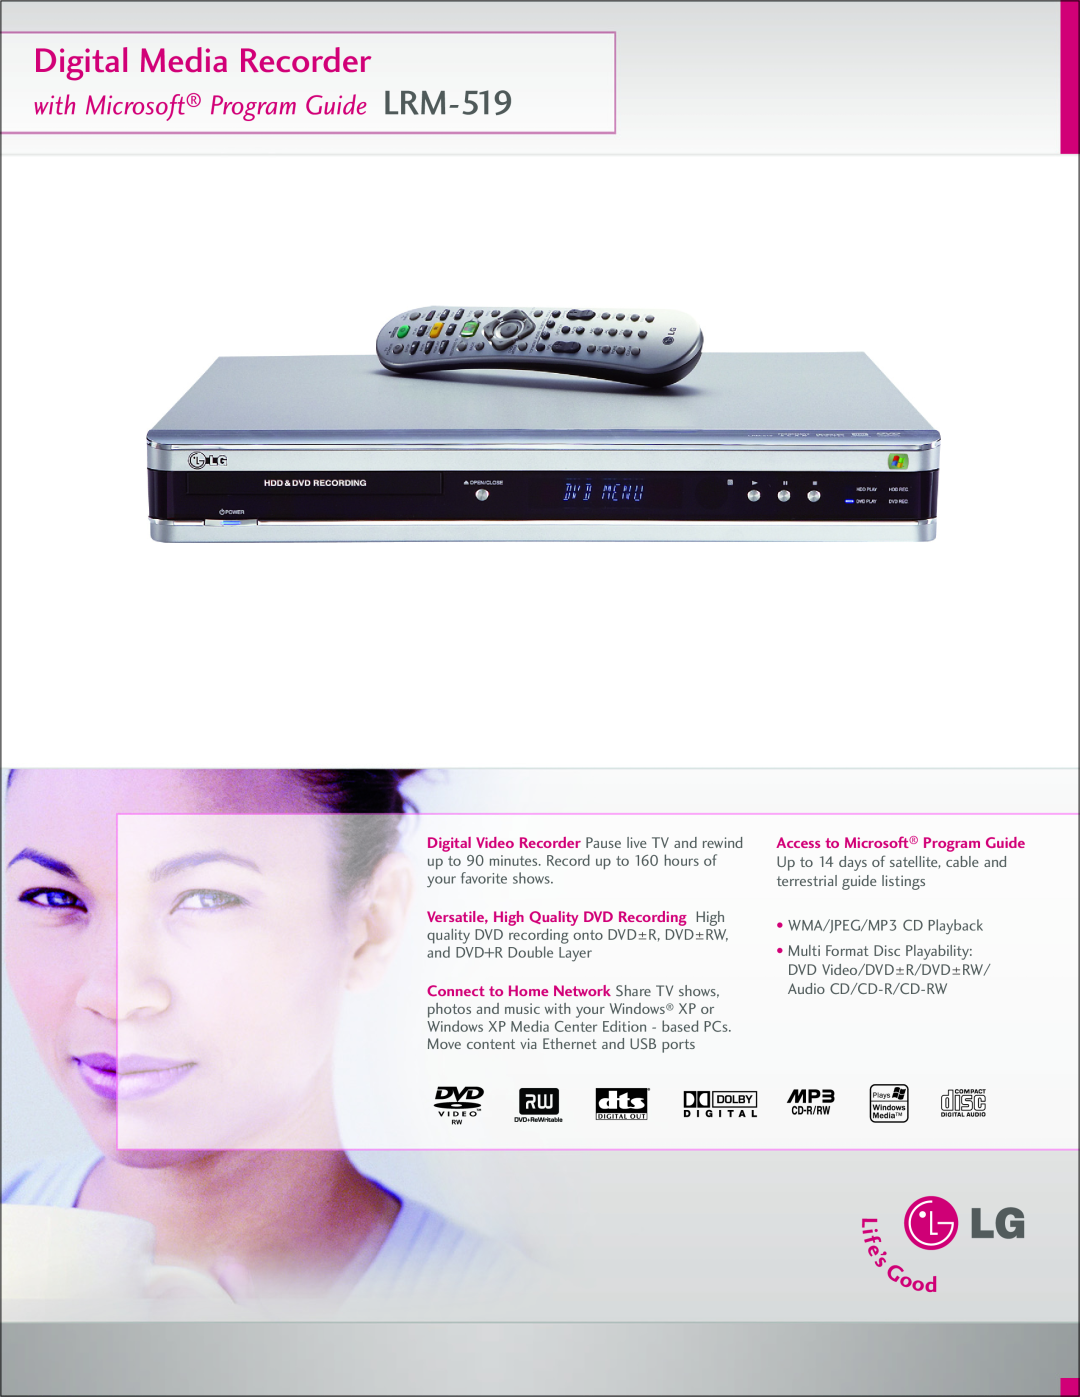 LG Electronics manual Digital Media Recorder, with Microsoft Program Guide LRM-519, WMA/JPEG/MP3 CD Playback 